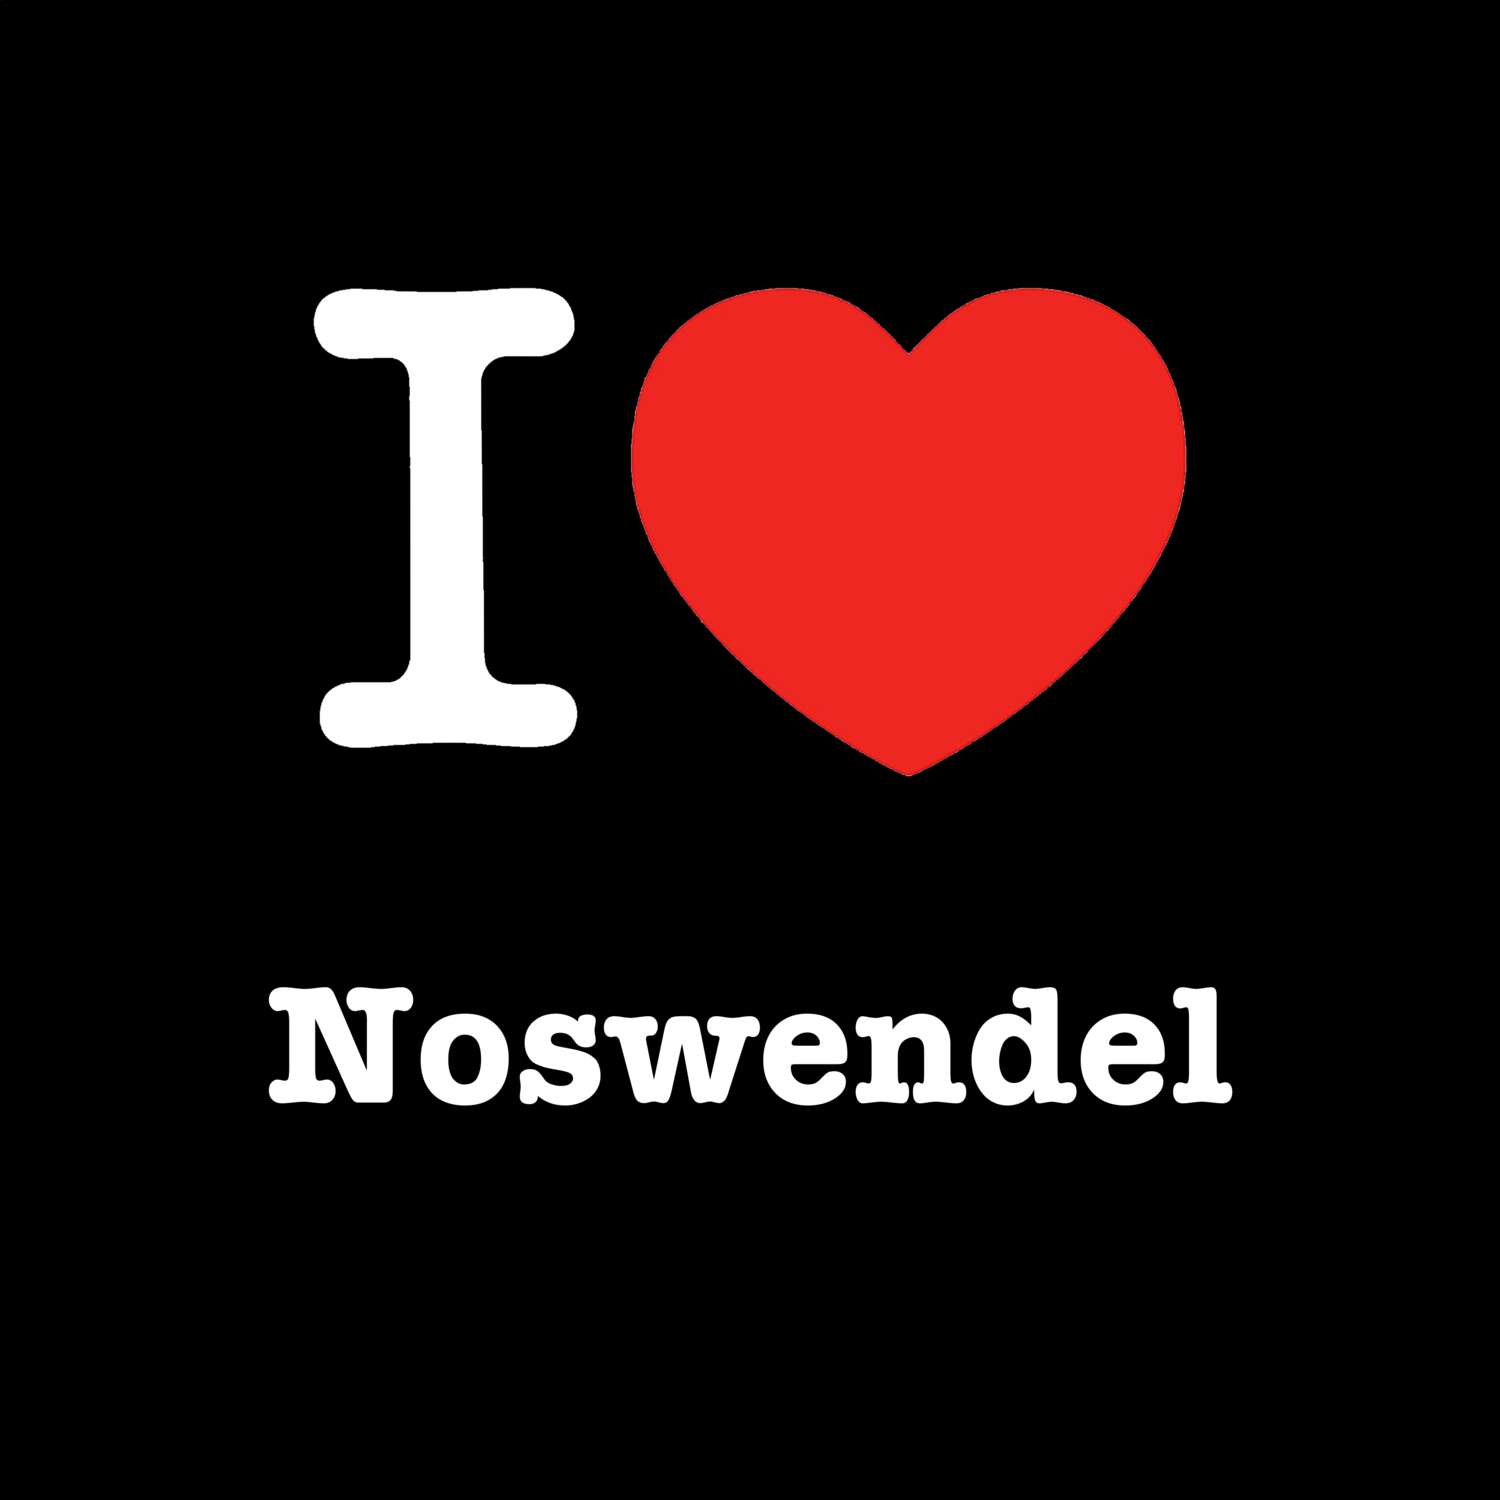 Noswendel T-Shirt »I love«